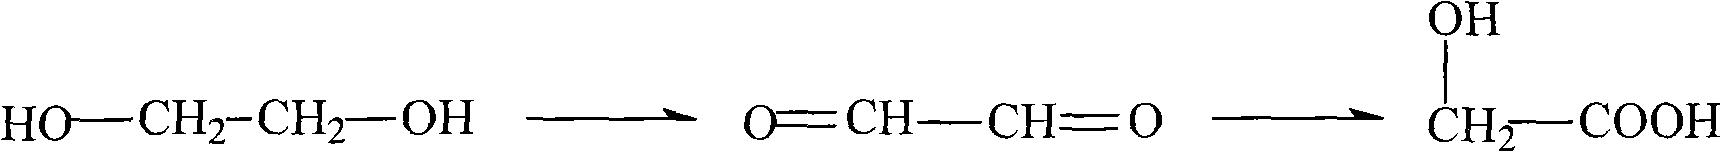 Method for preparing glycollic acid by glycol